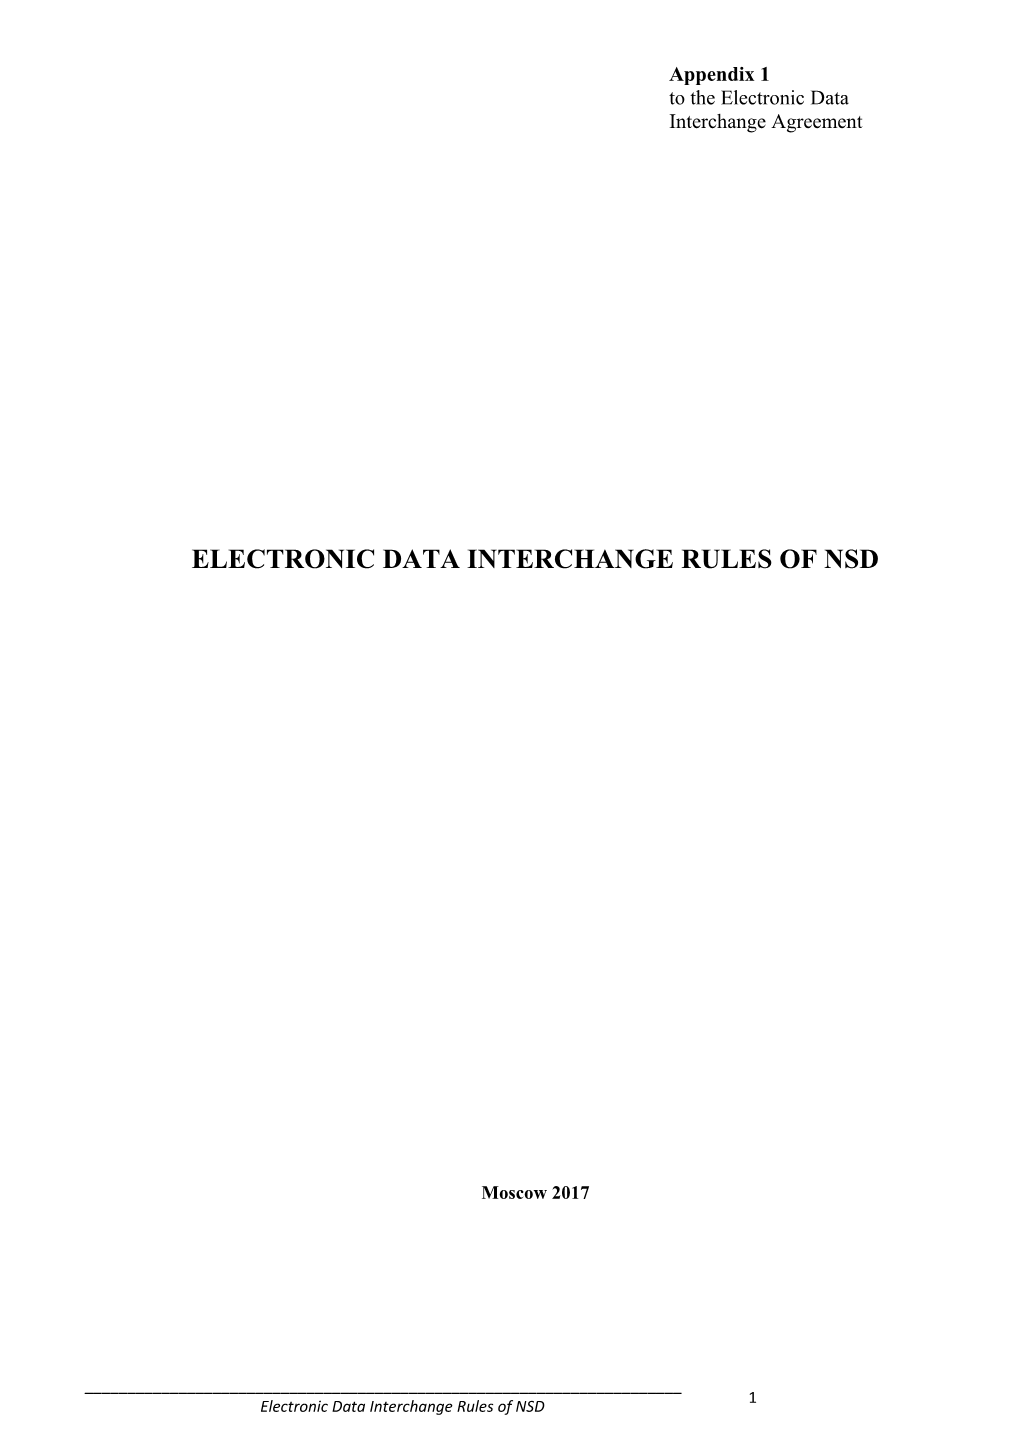 Electronic Data Interchange Rules of Nsd